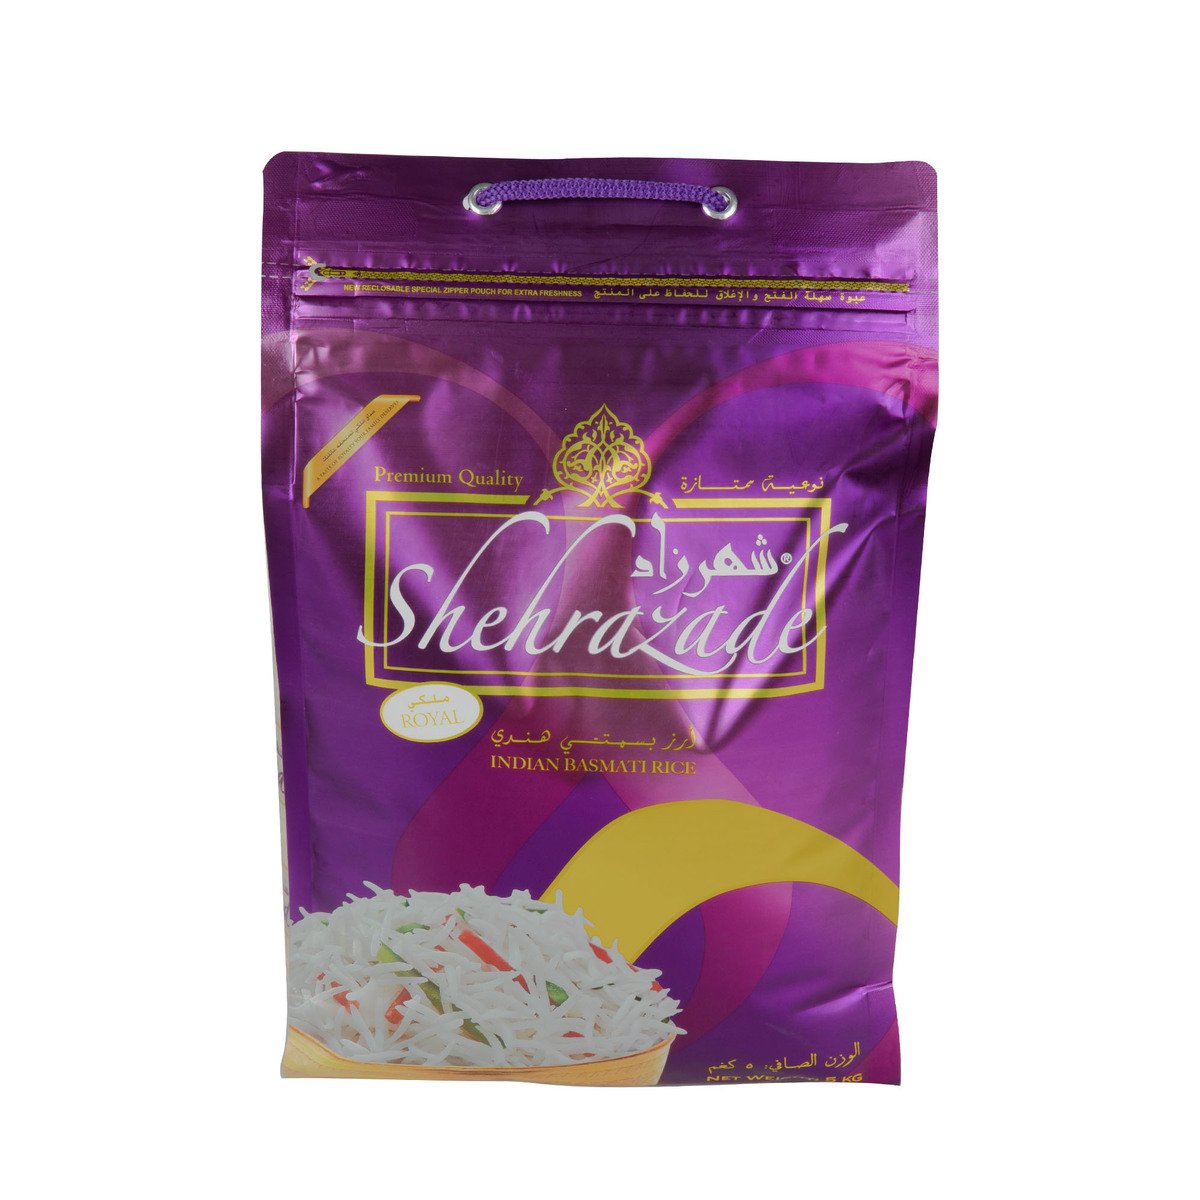 Shehrazade Royal Indian Basmati Rice 5 kg